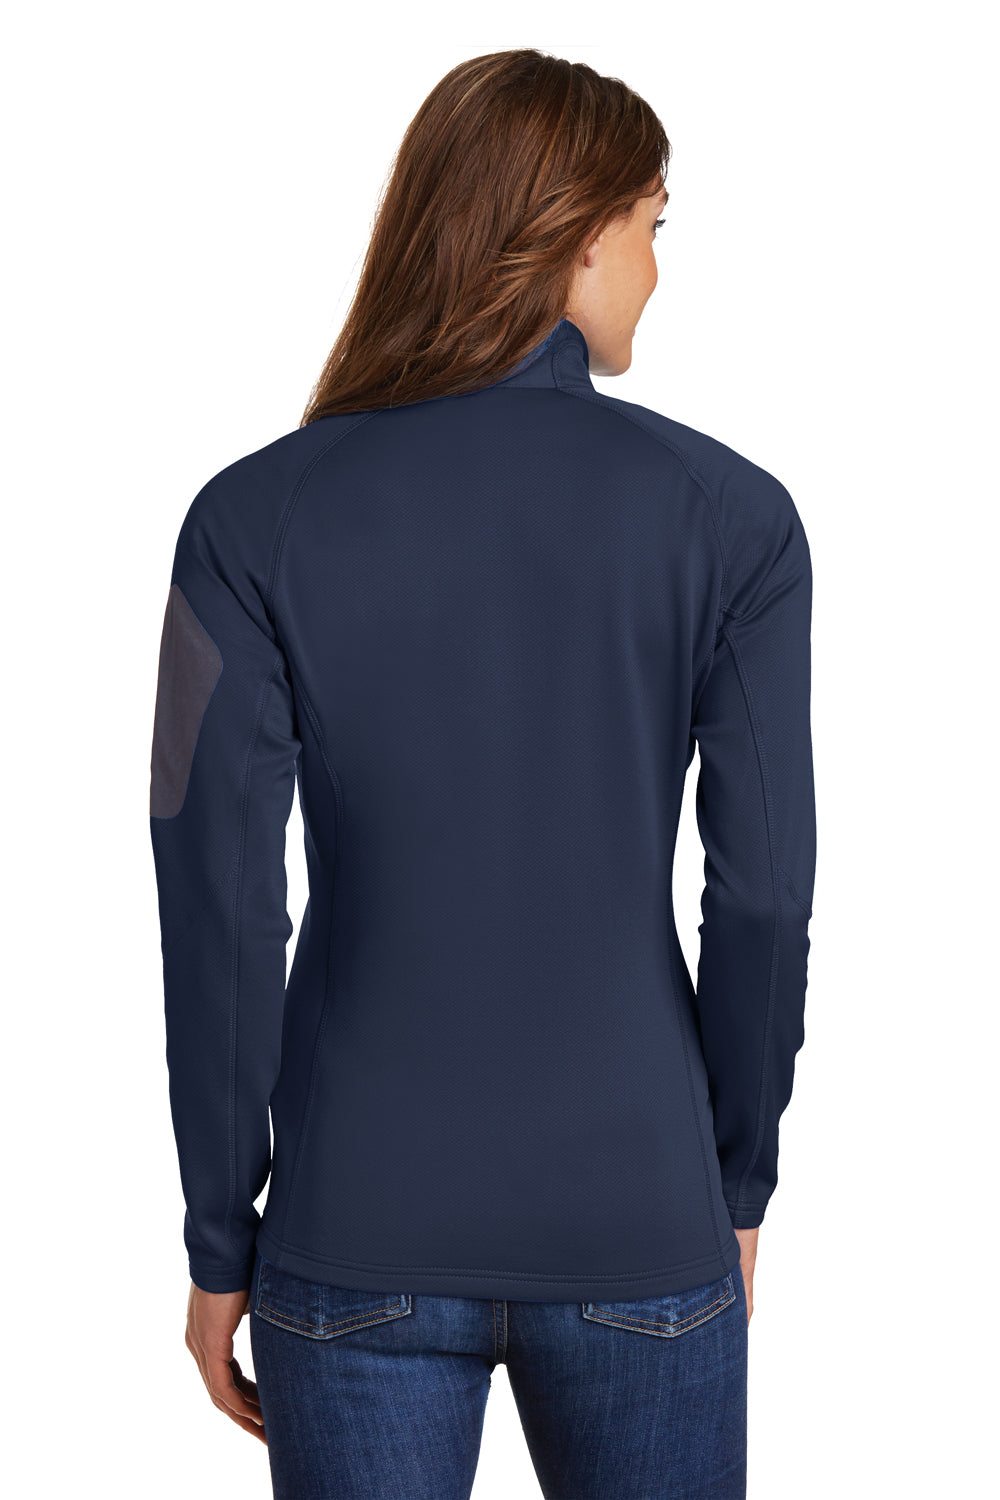 Eddie Bauer EB235 Womens Performance Fleece 1/4 Zip Sweatshirt River Navy Blue Model Back